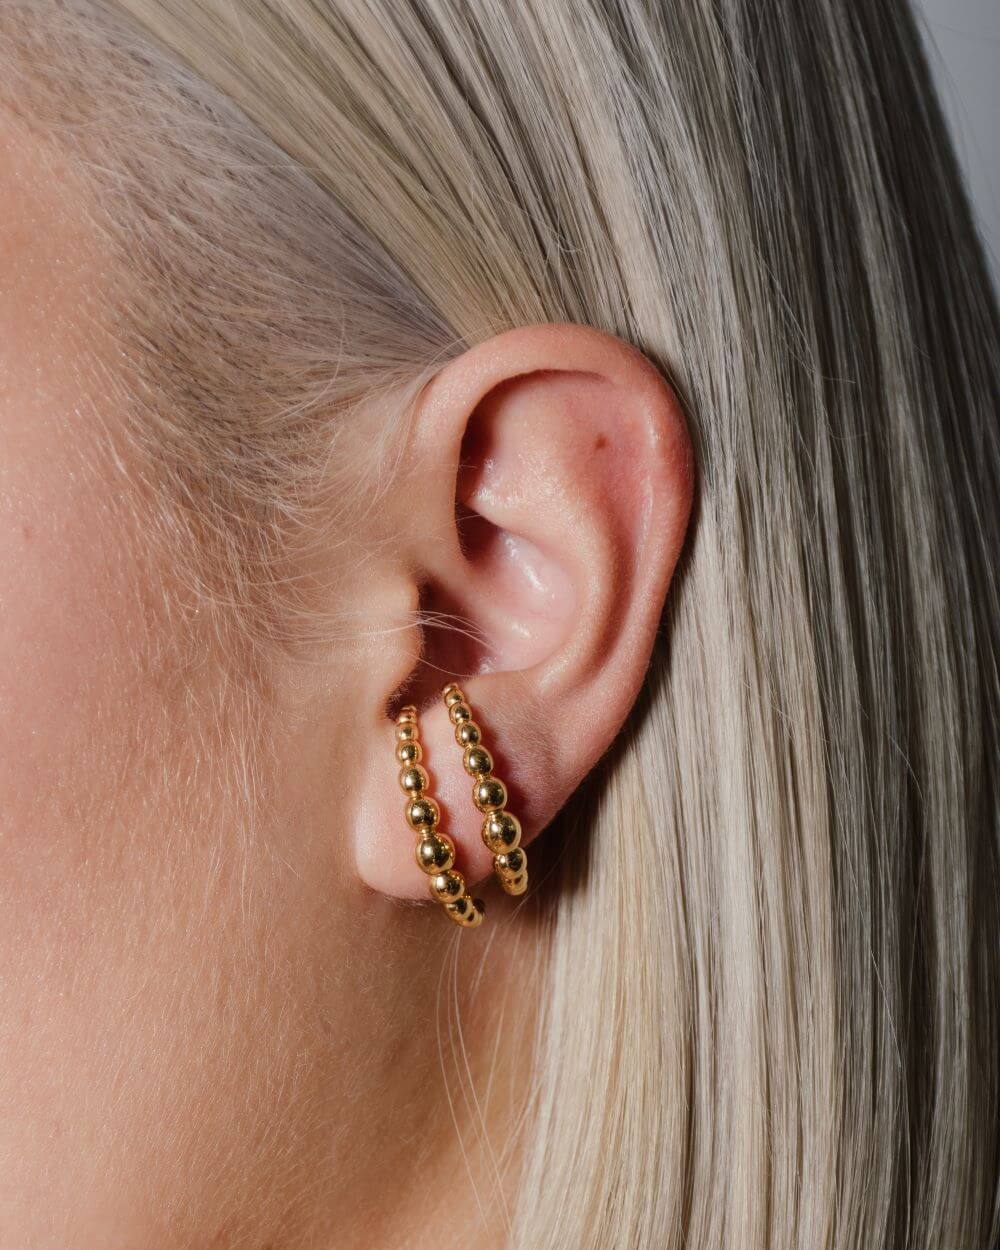 heroyne - sustainable design jewelry, Julia earrings, unique ball earrings, handcrafted in 14 karat gold vermeil